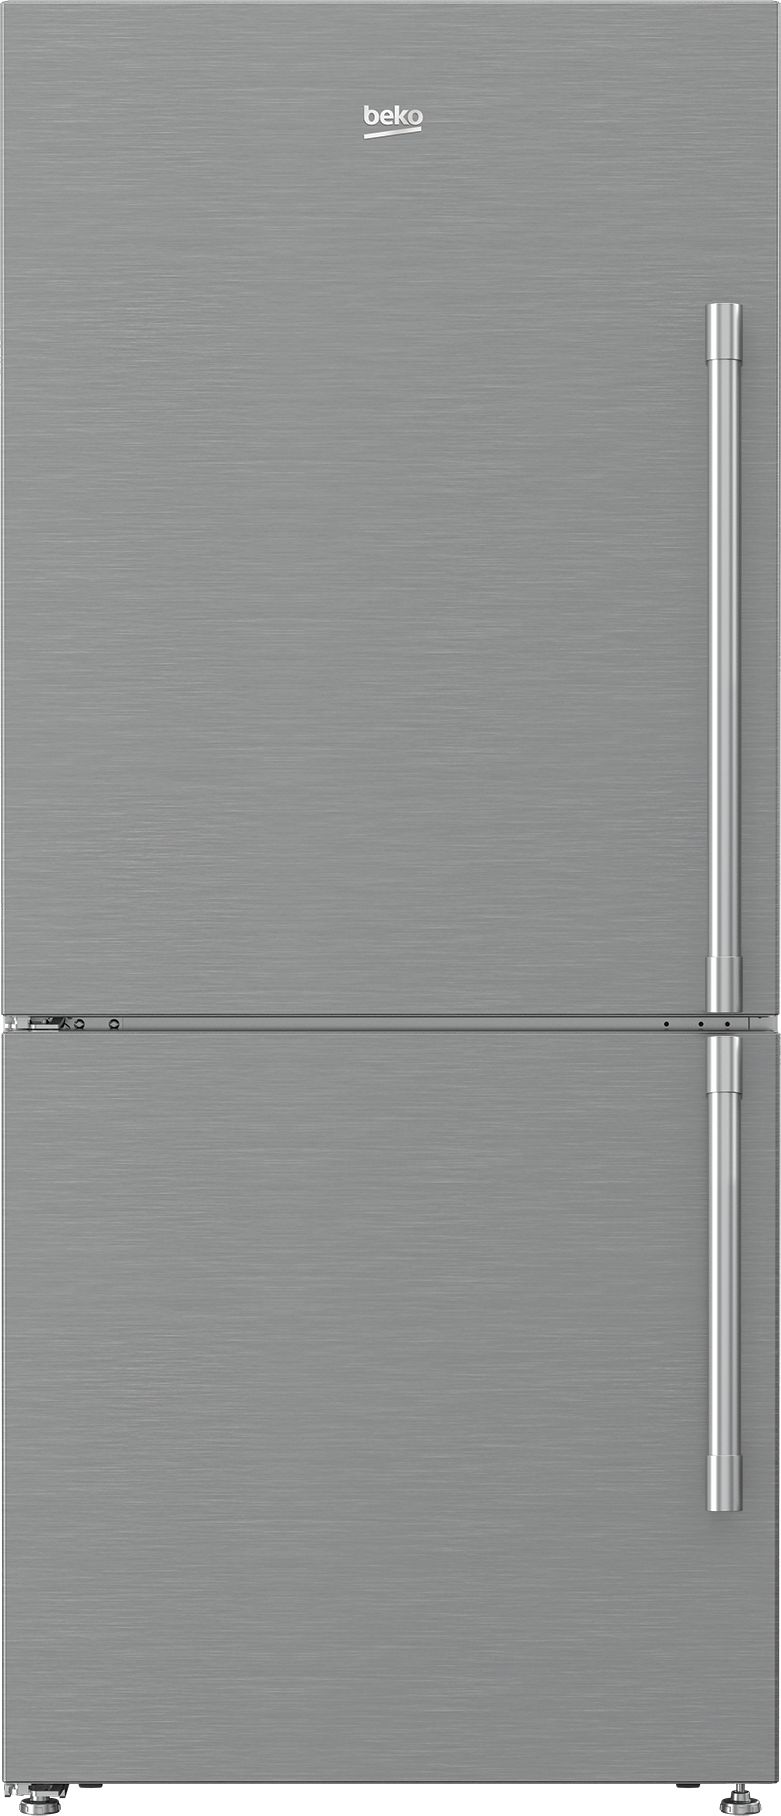 Beko 16.2 Cu. Ft. Fingerprint Free Stainless Steel Freestanding Bottom Freezer Refrigerator-BFBF3018SSIML